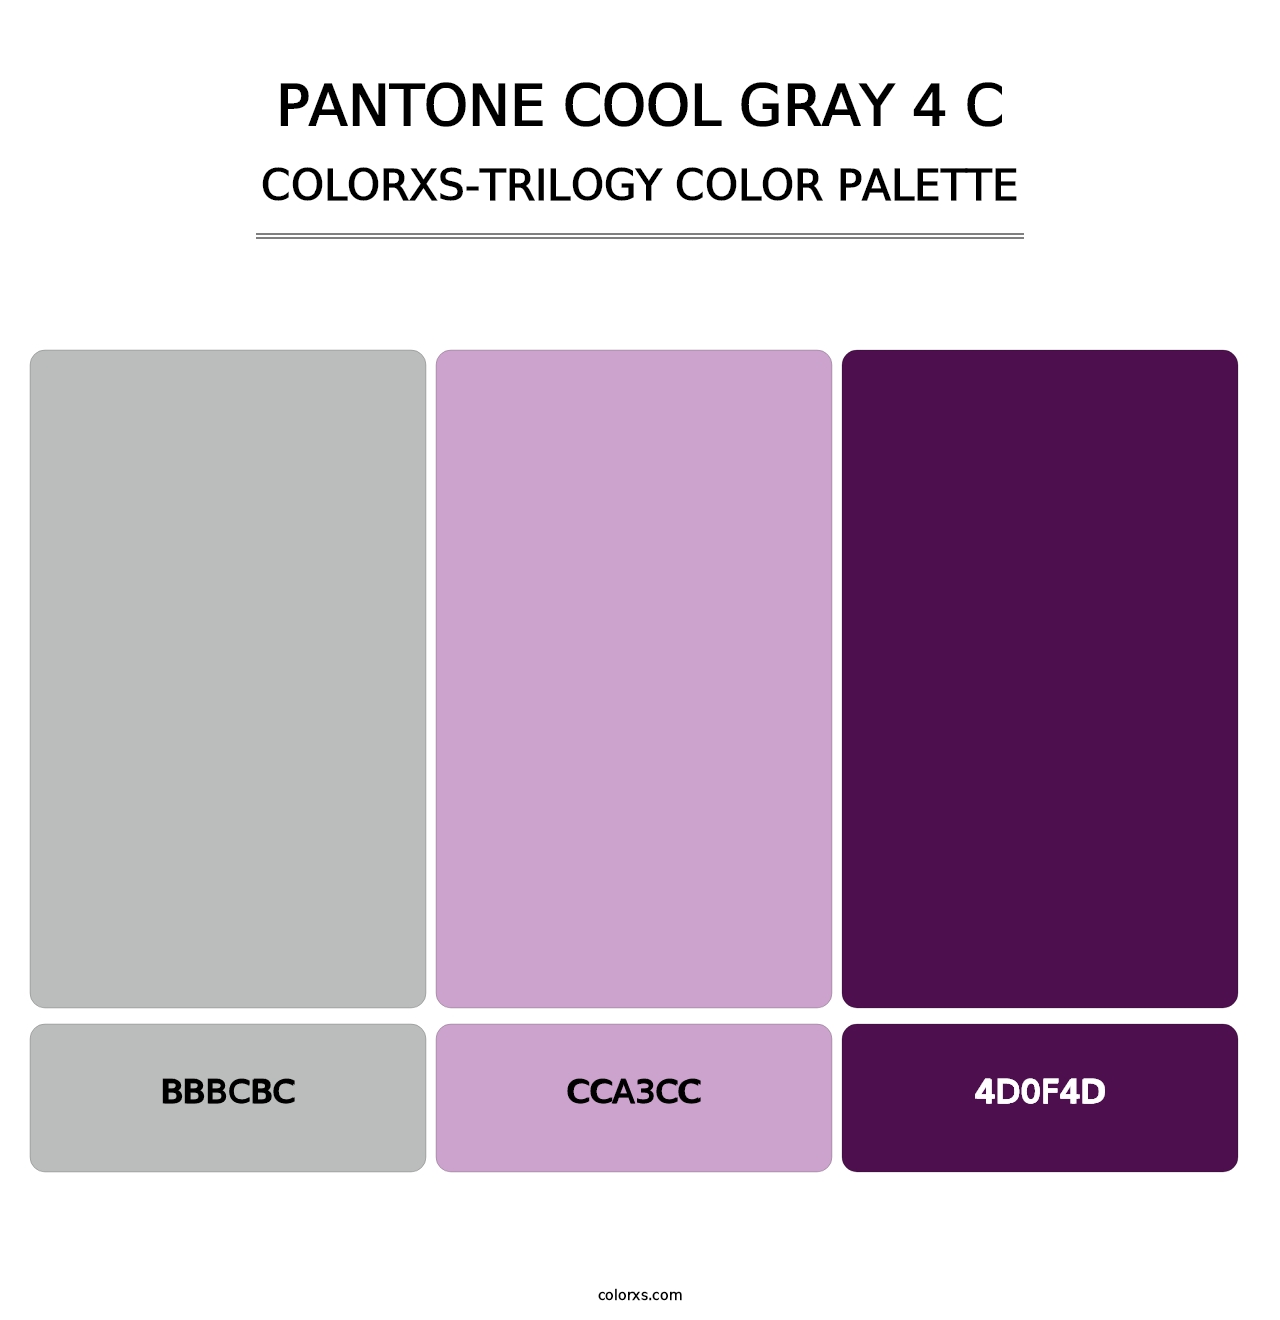 PANTONE Cool Gray 4 C - Colorxs Trilogy Palette